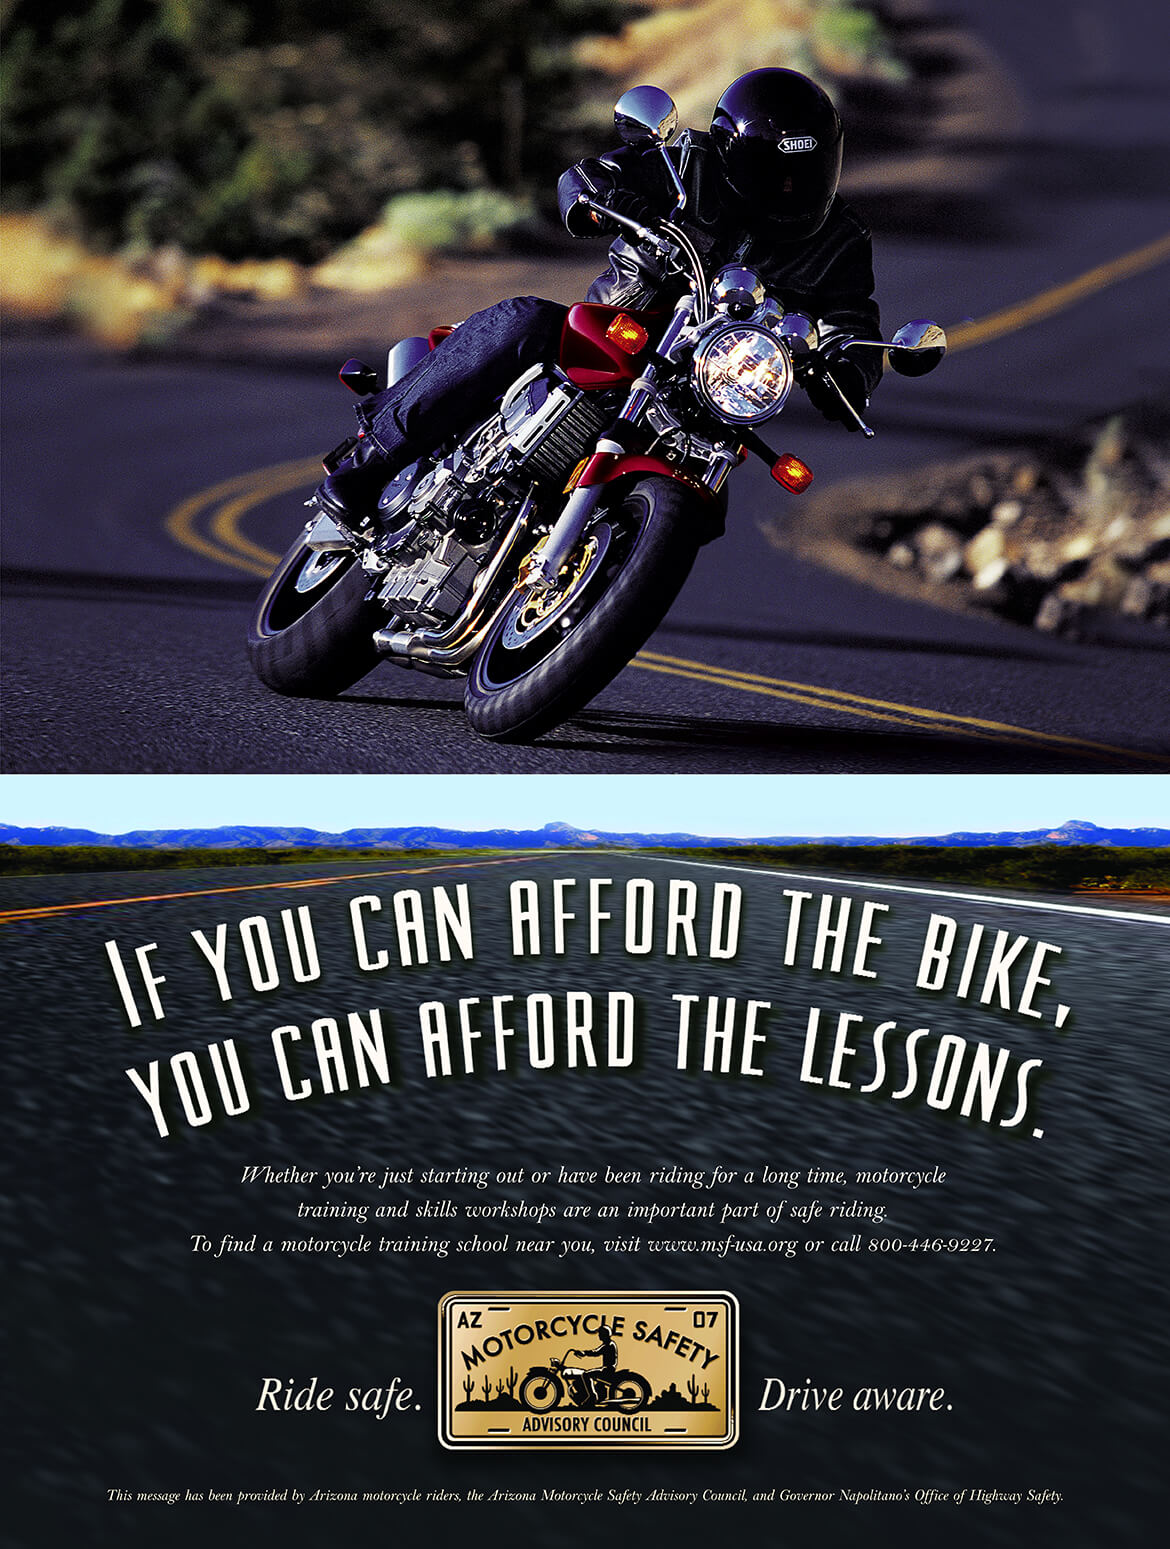 Arizona Motorcycle Safety Advisory Council poster #3